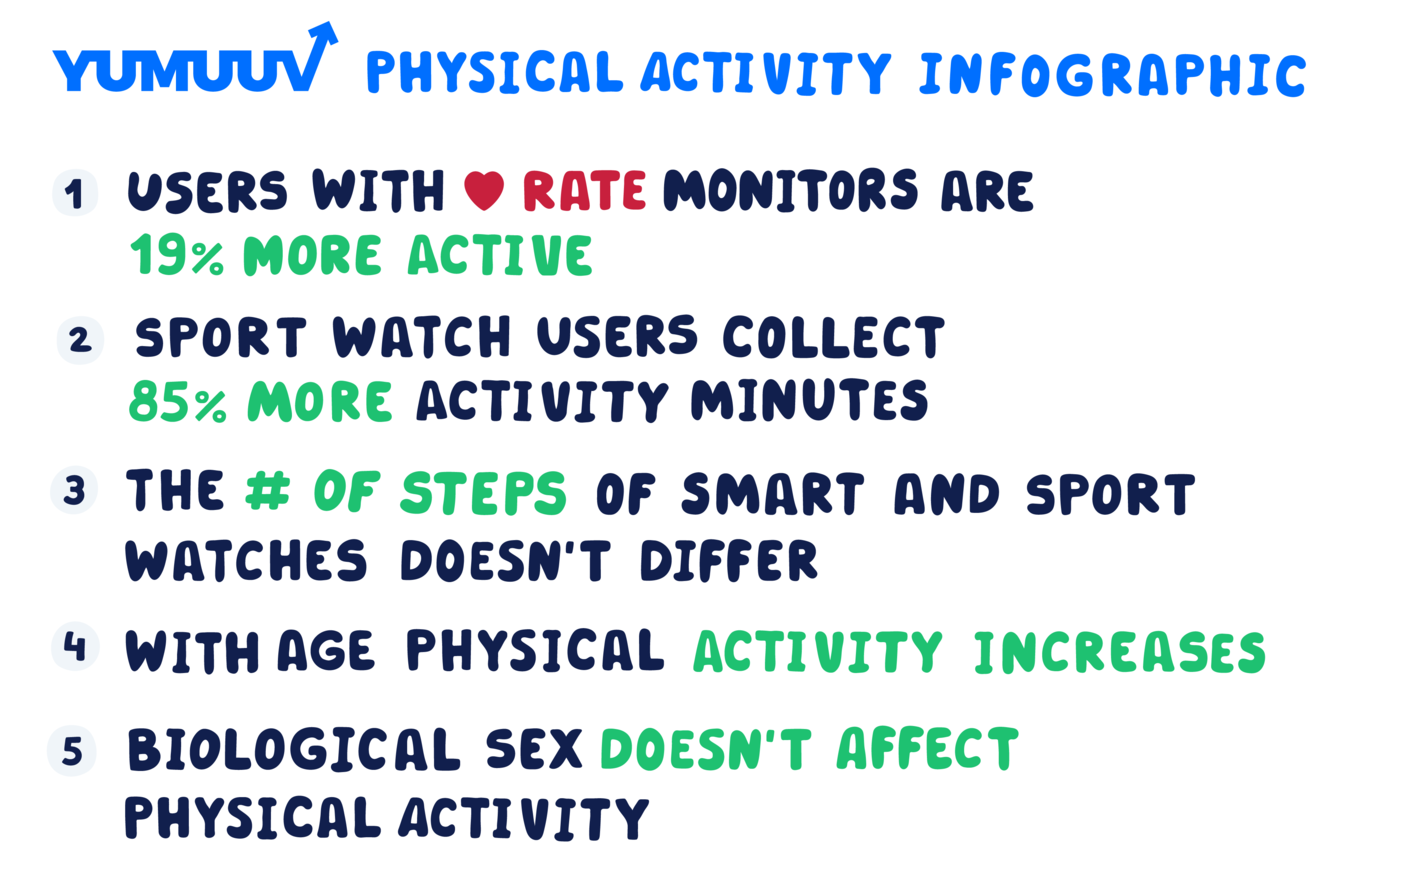 YuMuuv Physical Activity Infographic